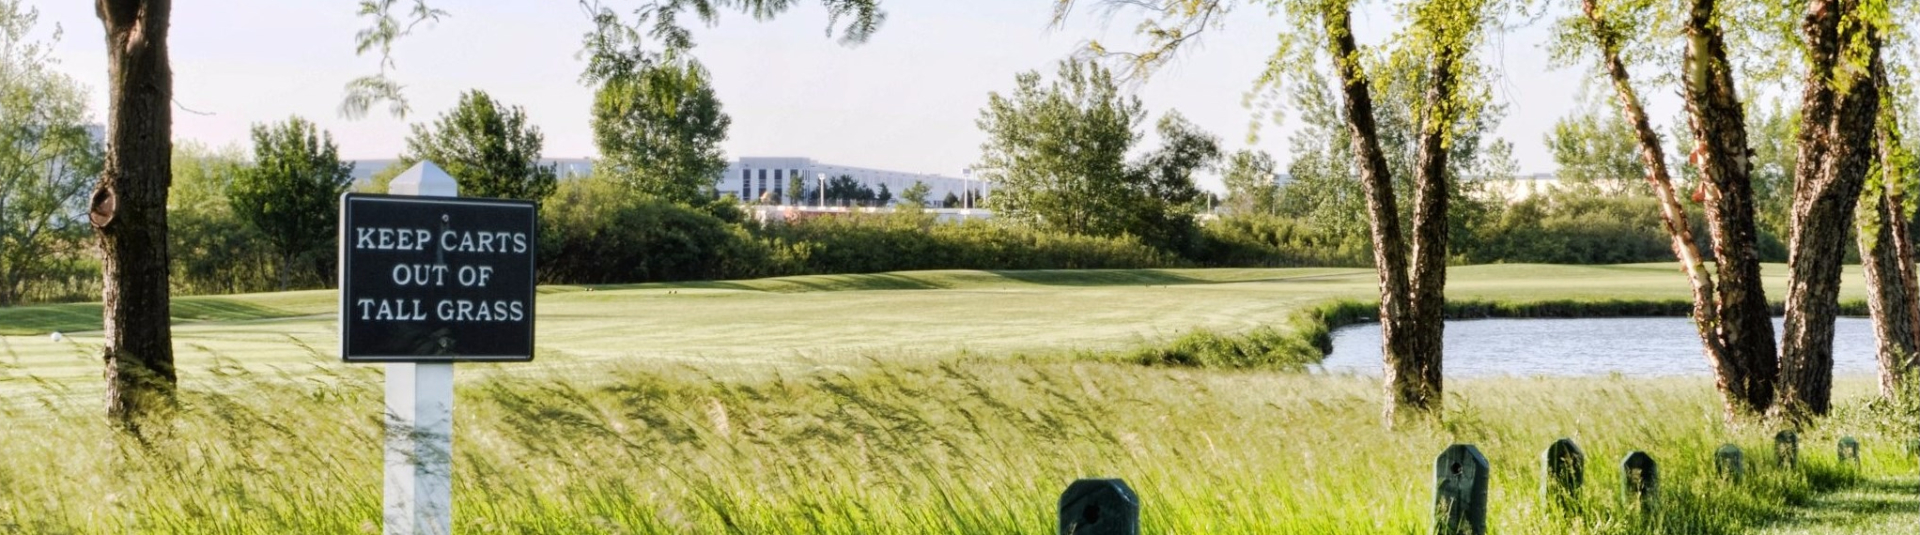 Image of golf ball on tee on grass.